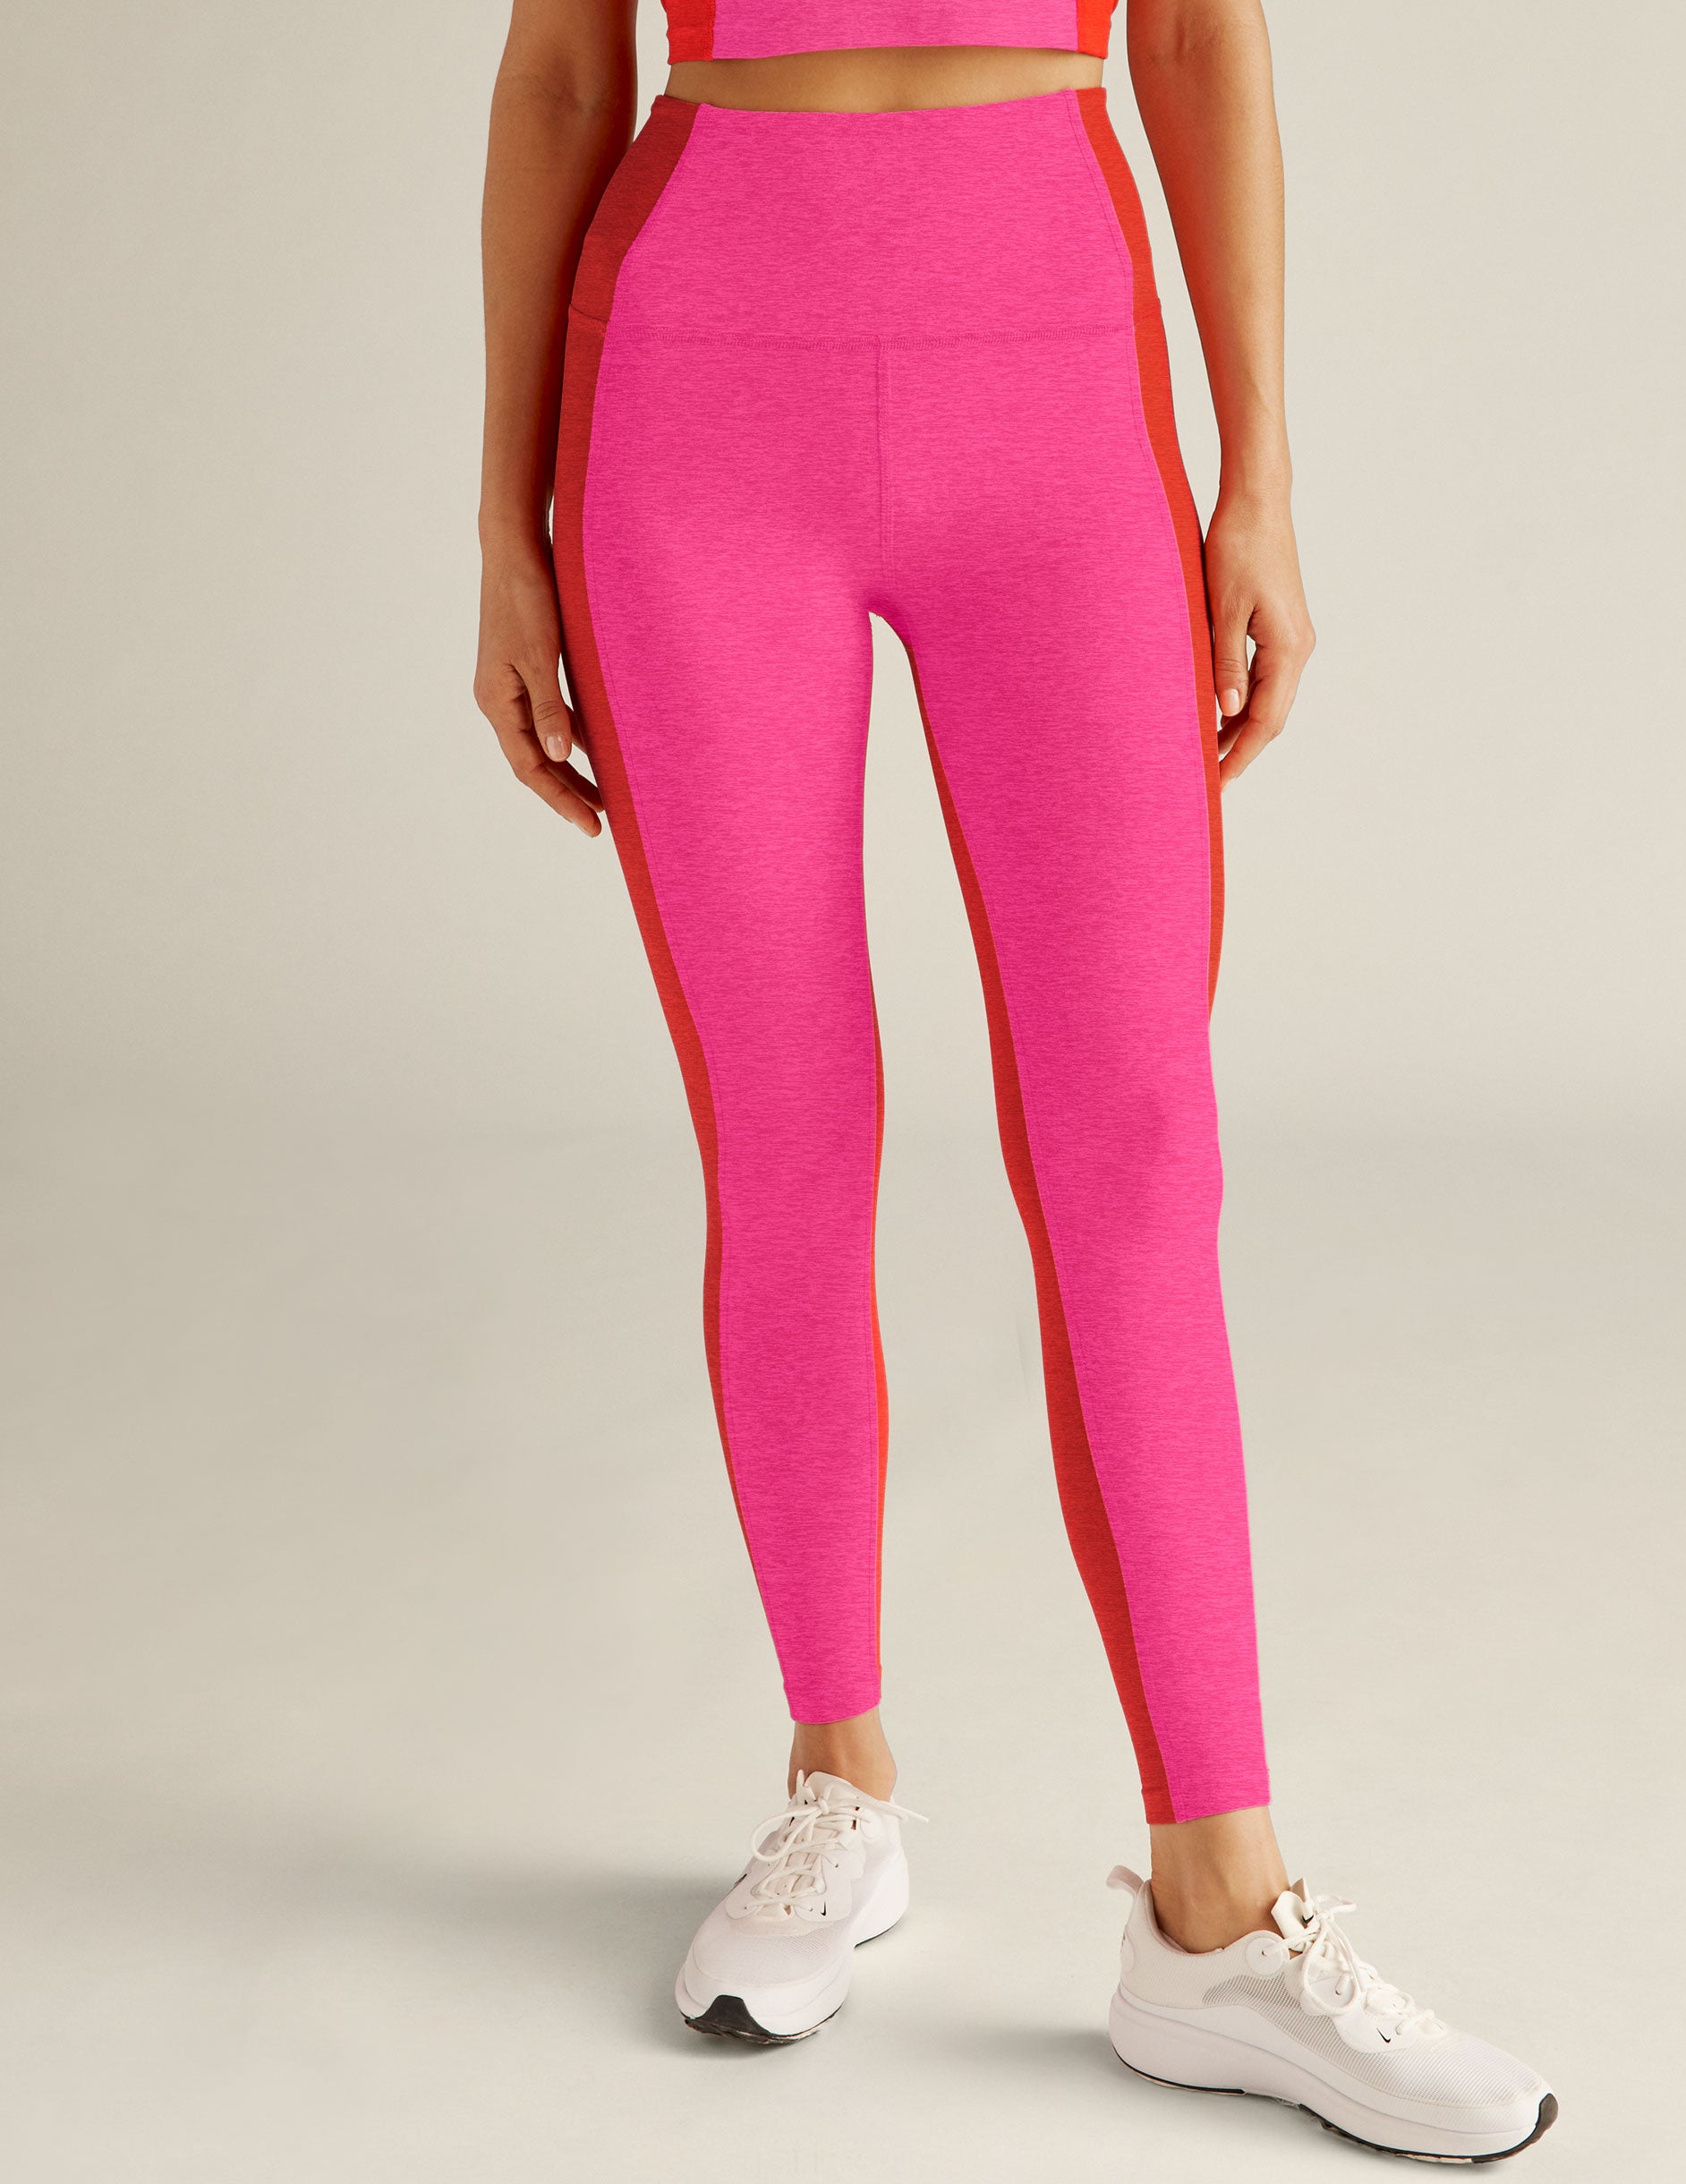 Underwraps UR28270LG Womens Neon Pink Lace Leggings - Large 